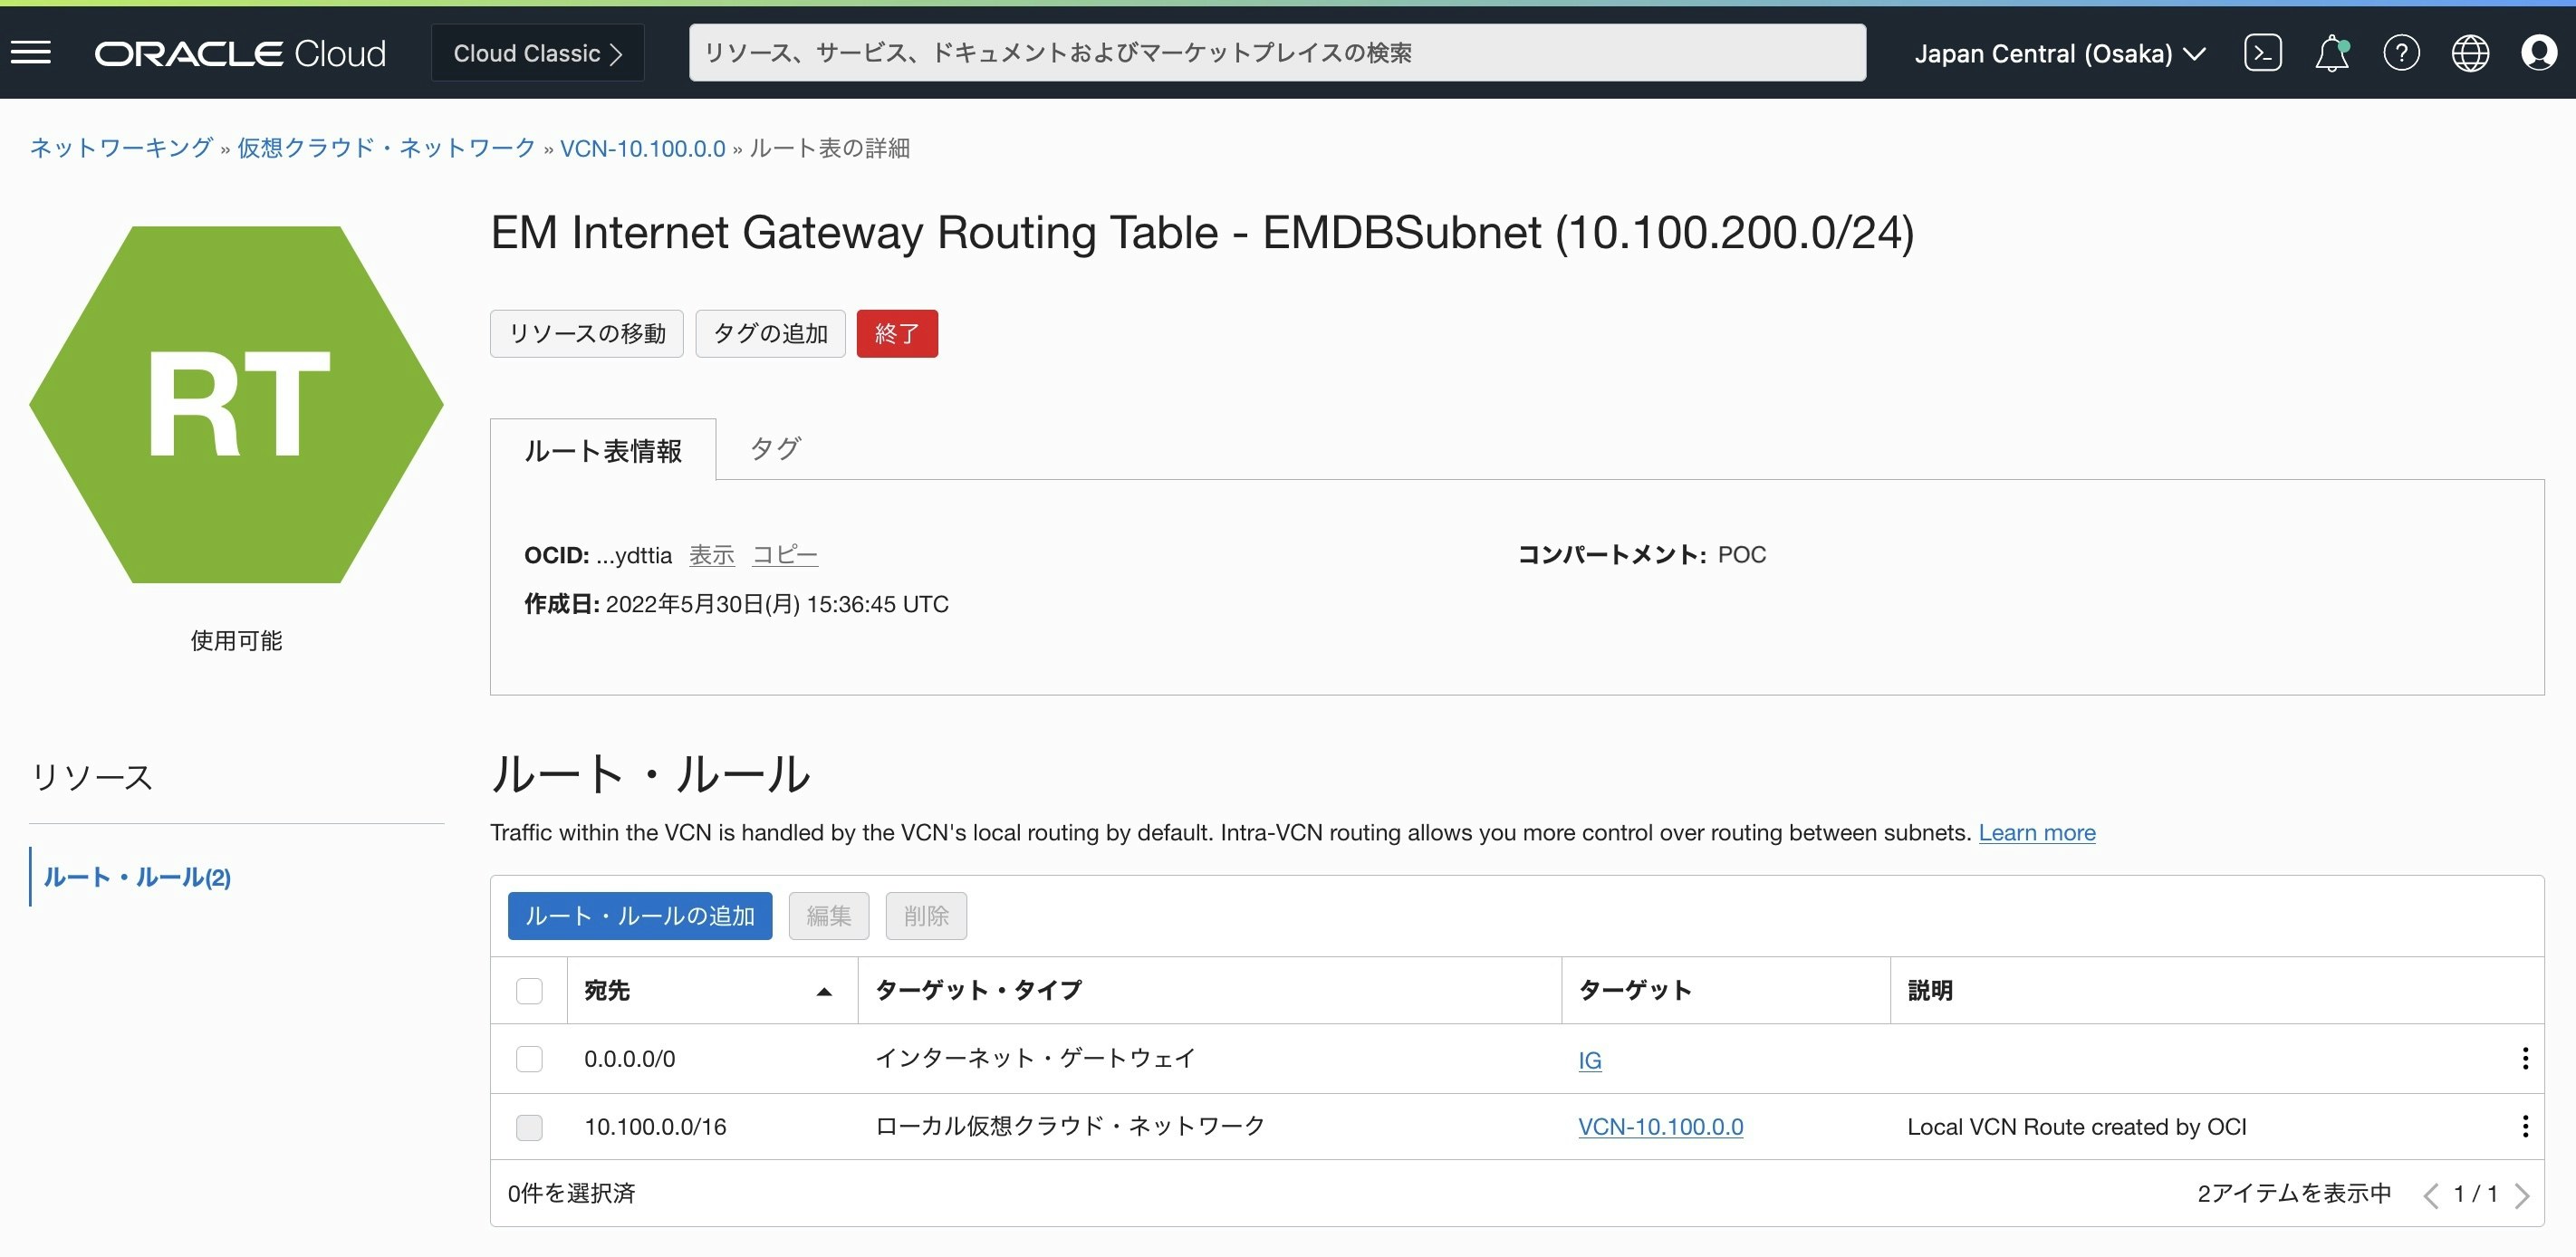 04_RT-EM Internet Gateway Routing Table - EMDBSubnet (10.100.200.0:24).jpg